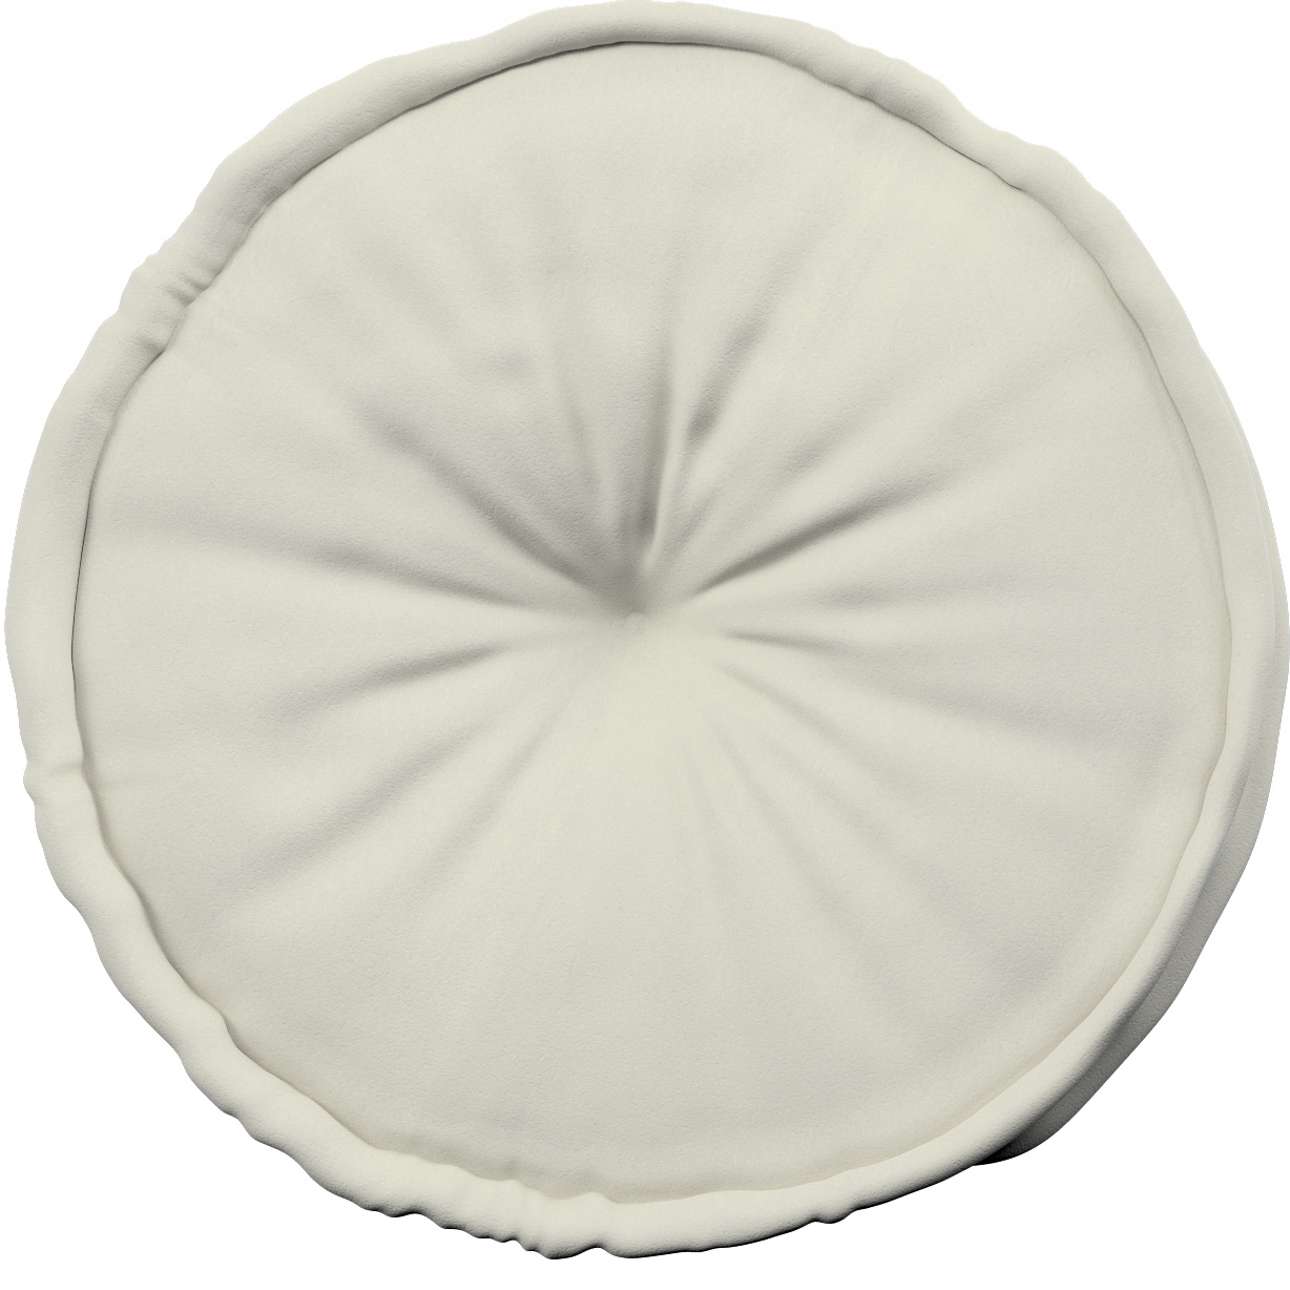 French pouf 50x13cm - Posh Velvet - creamy white